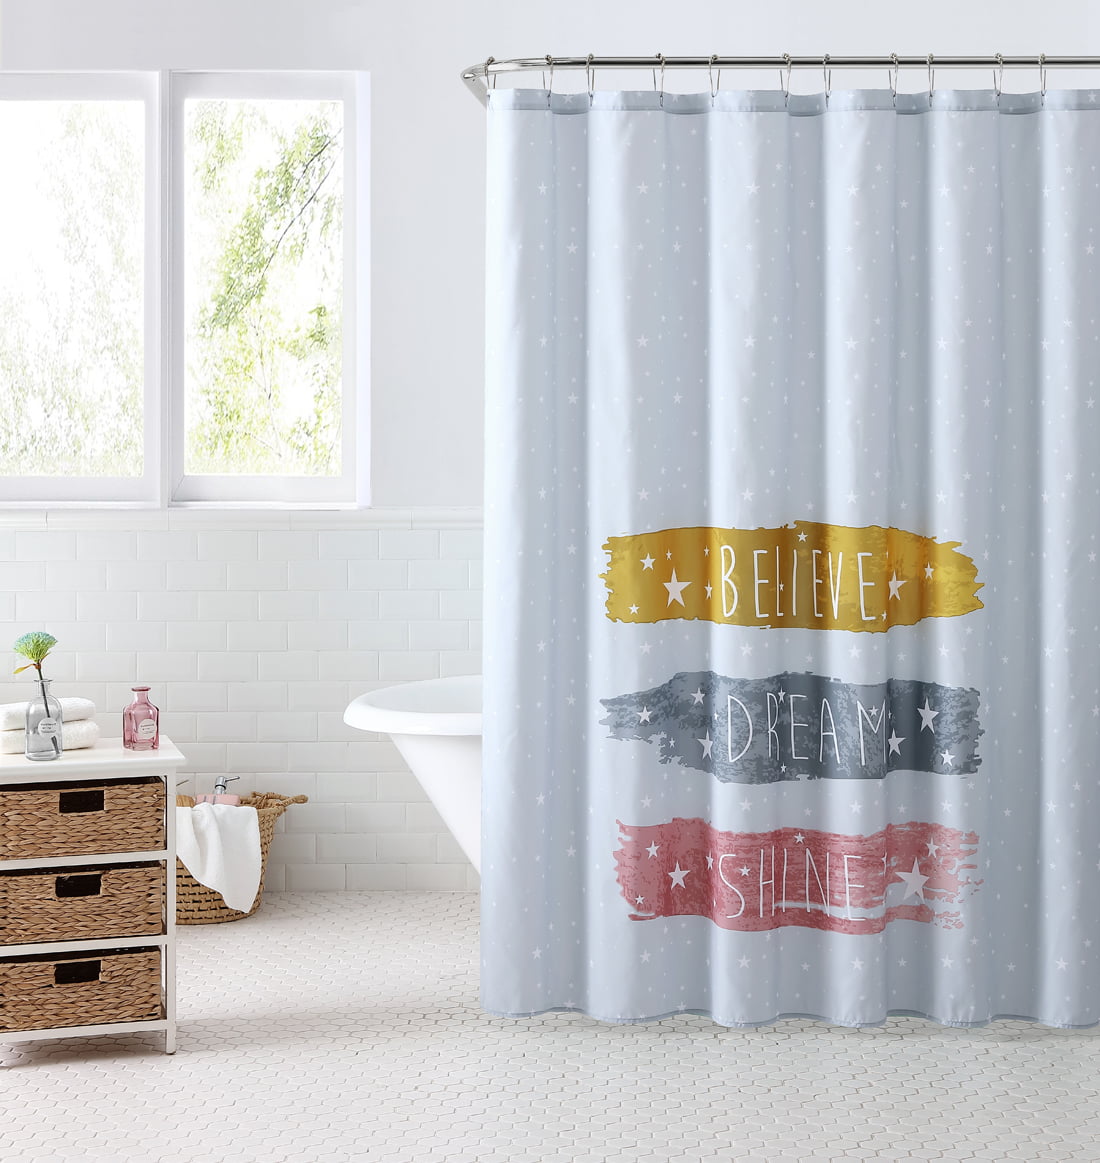 Bath Rug And Hooded Bath Towel 3PC New Shopkins Bathroom Shower Curtain 